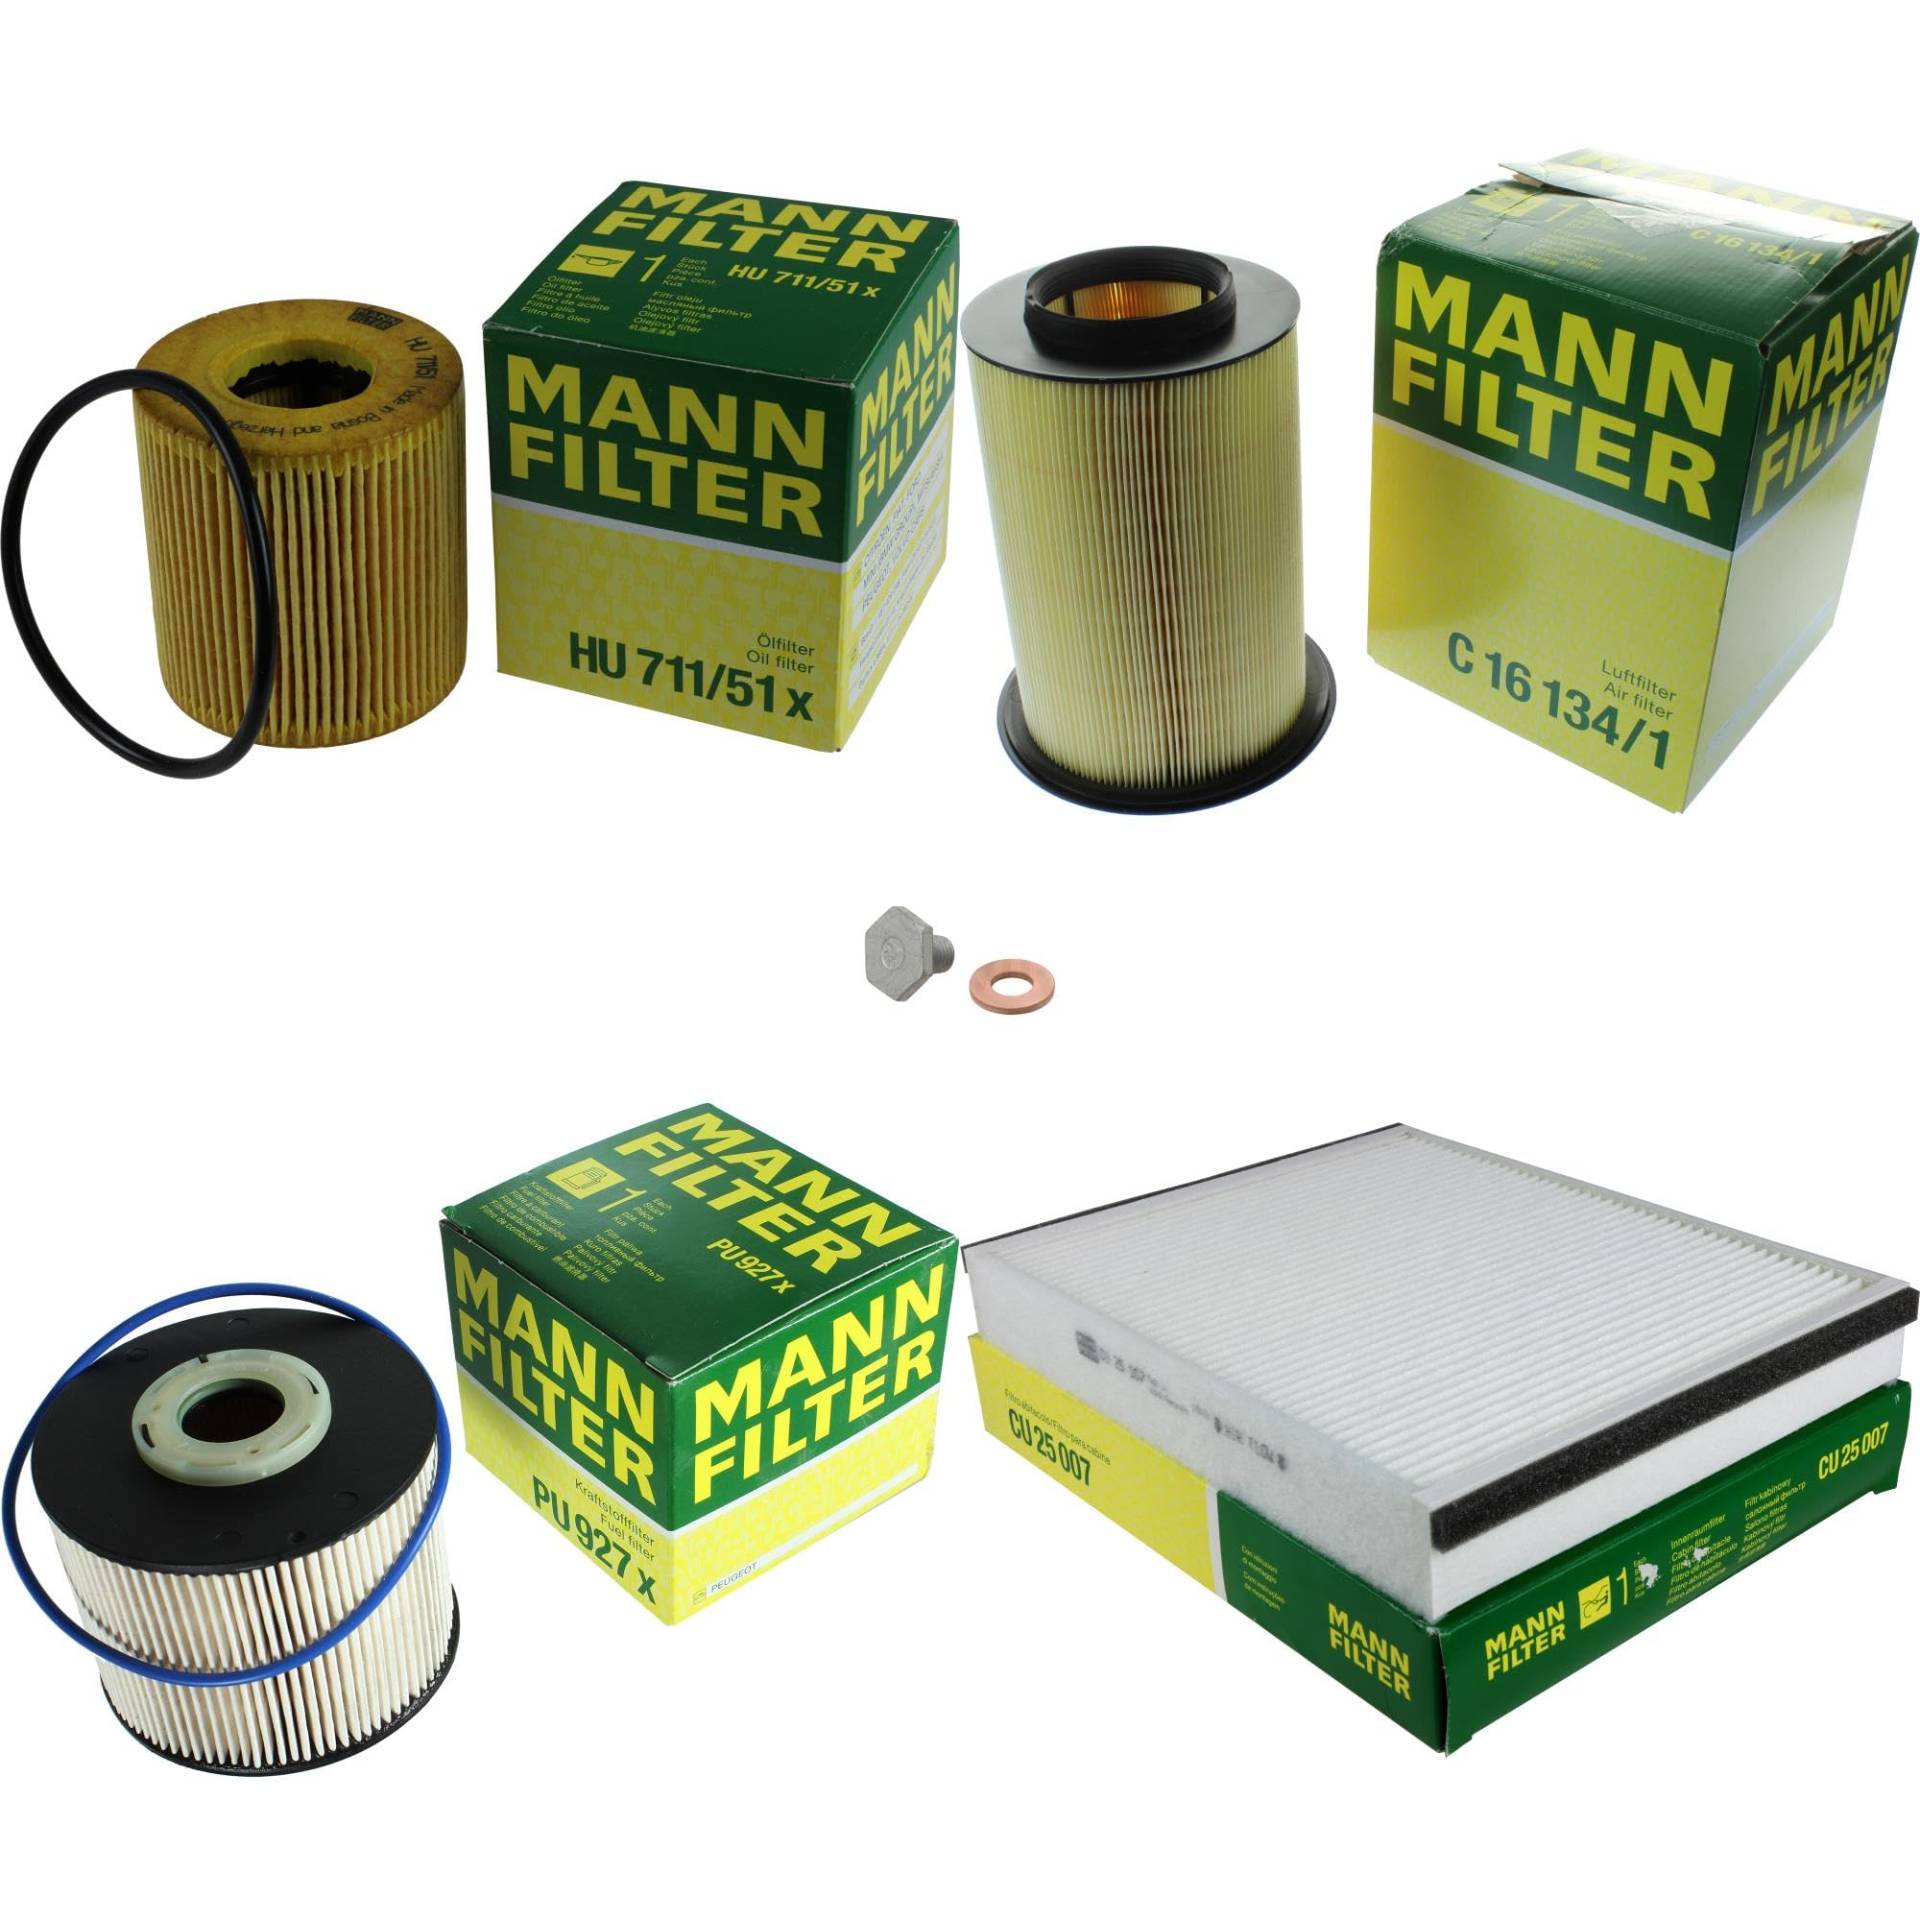 EISENFELS Filter Set Inspektionspaket erstellt mit MANN-FILTER Ölfilter HU 711/51 x, Luftfilter C 16 134/1, Kraftstofffilter PU 927 x, Innenraumfilter CU 25 007, Verschlussschraube von EISENFELS